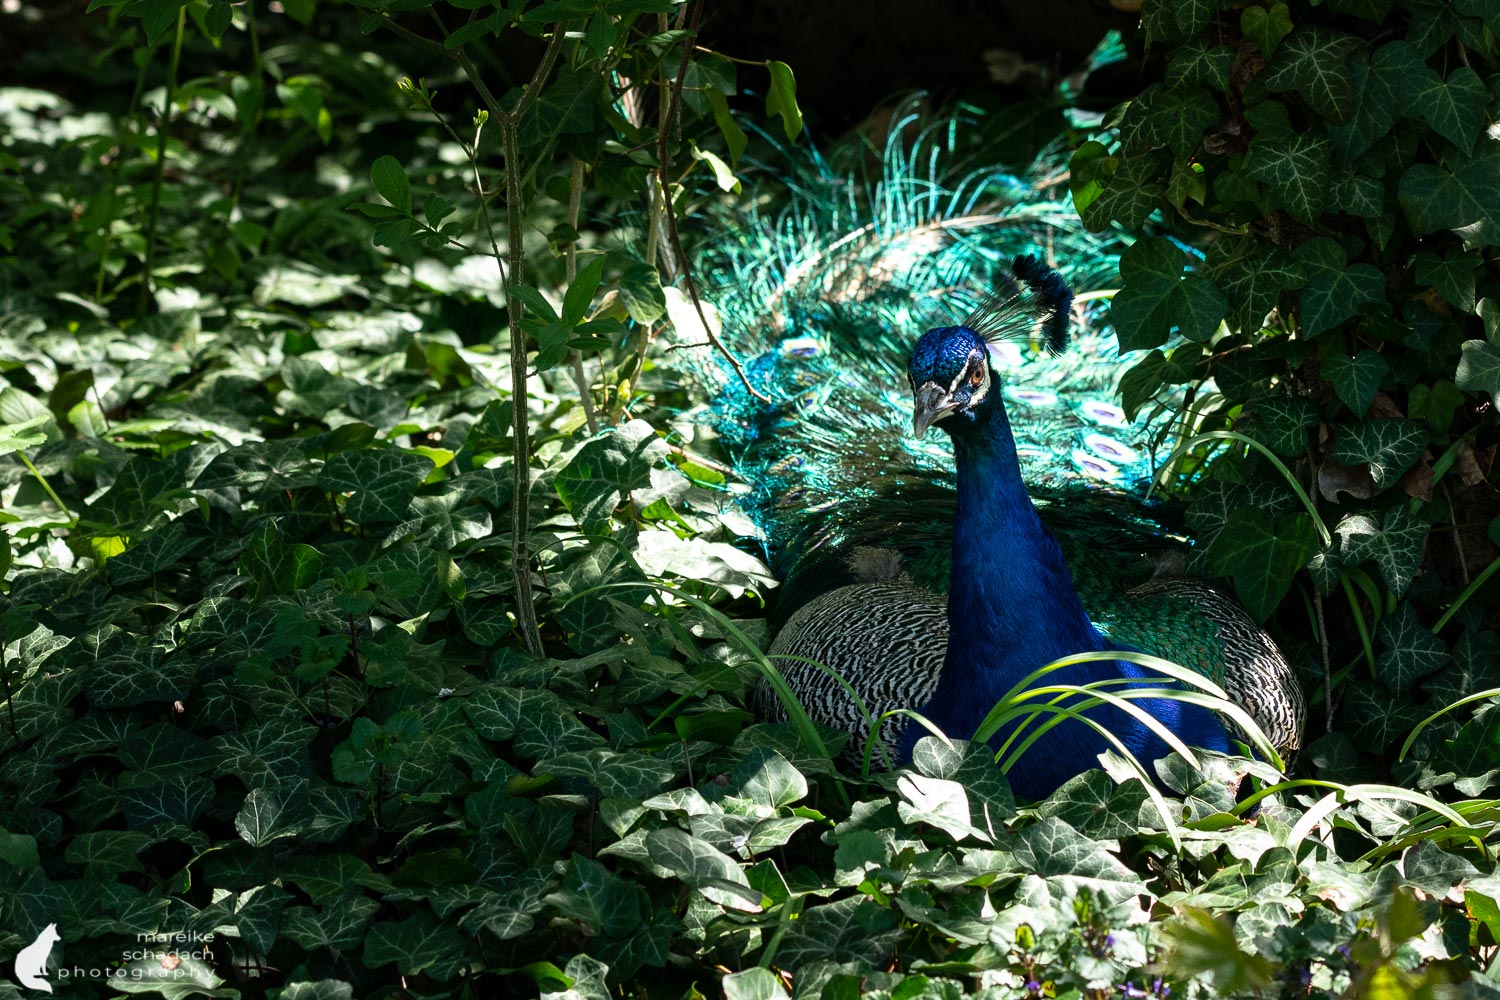 Blue Peacock on Peacock Island in Berlin